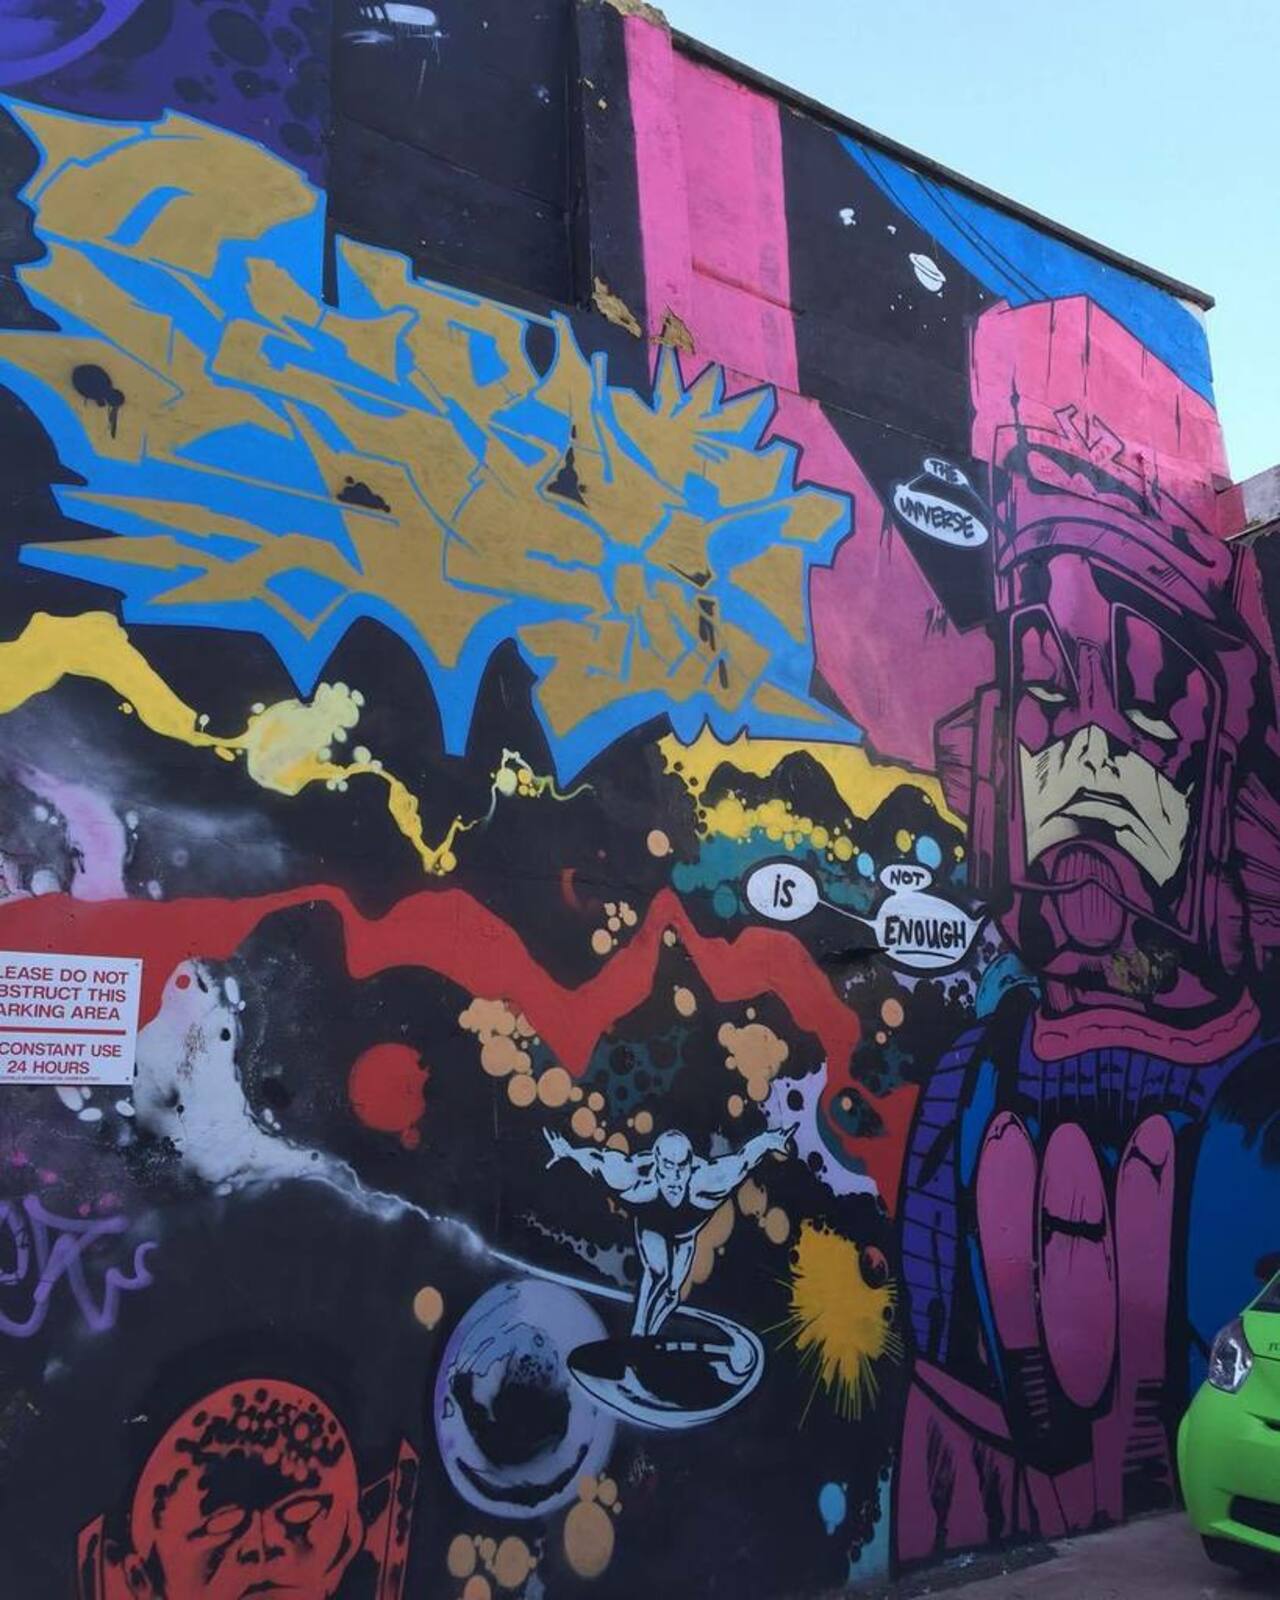 RT @artpushr: via #vera45 "http://ift.tt/1R81H7Q" #graffiti #streetart http://t.co/n4bD51isoz